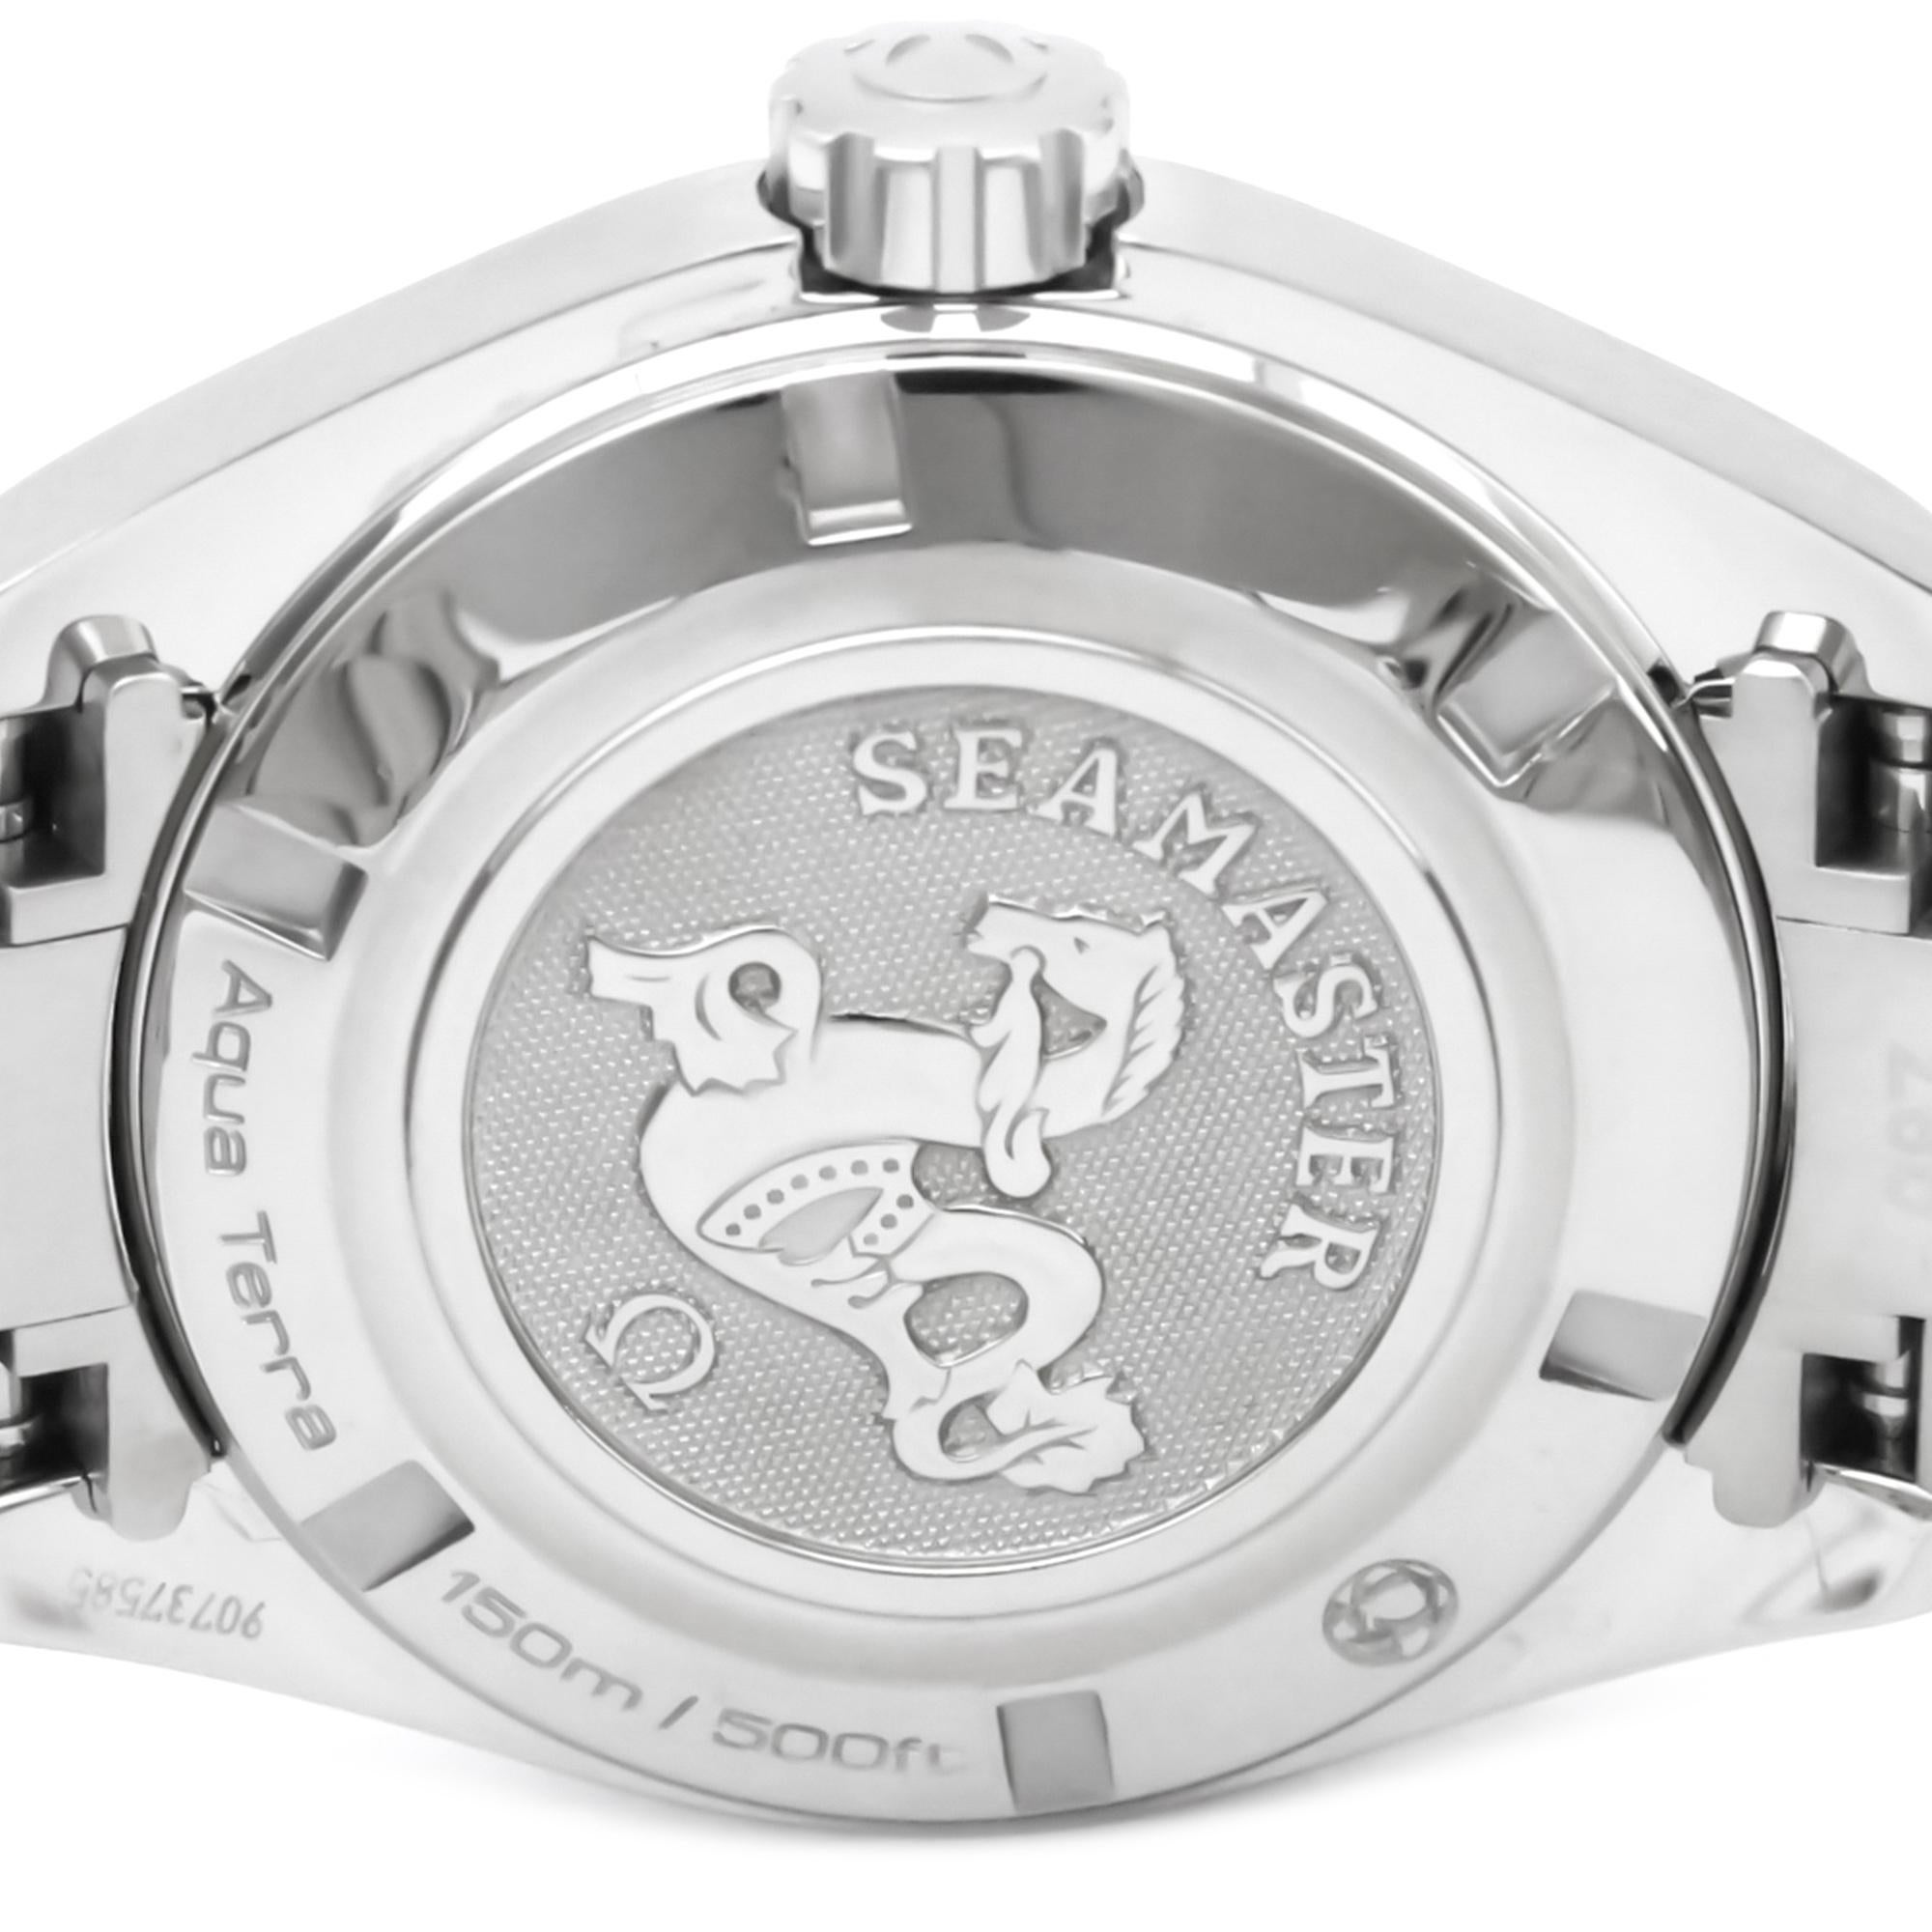 Vintage Authentic Seamaster Aqua Terra Jewellery Quartz Watch 231 10 30 61 56 00 For Sale 2